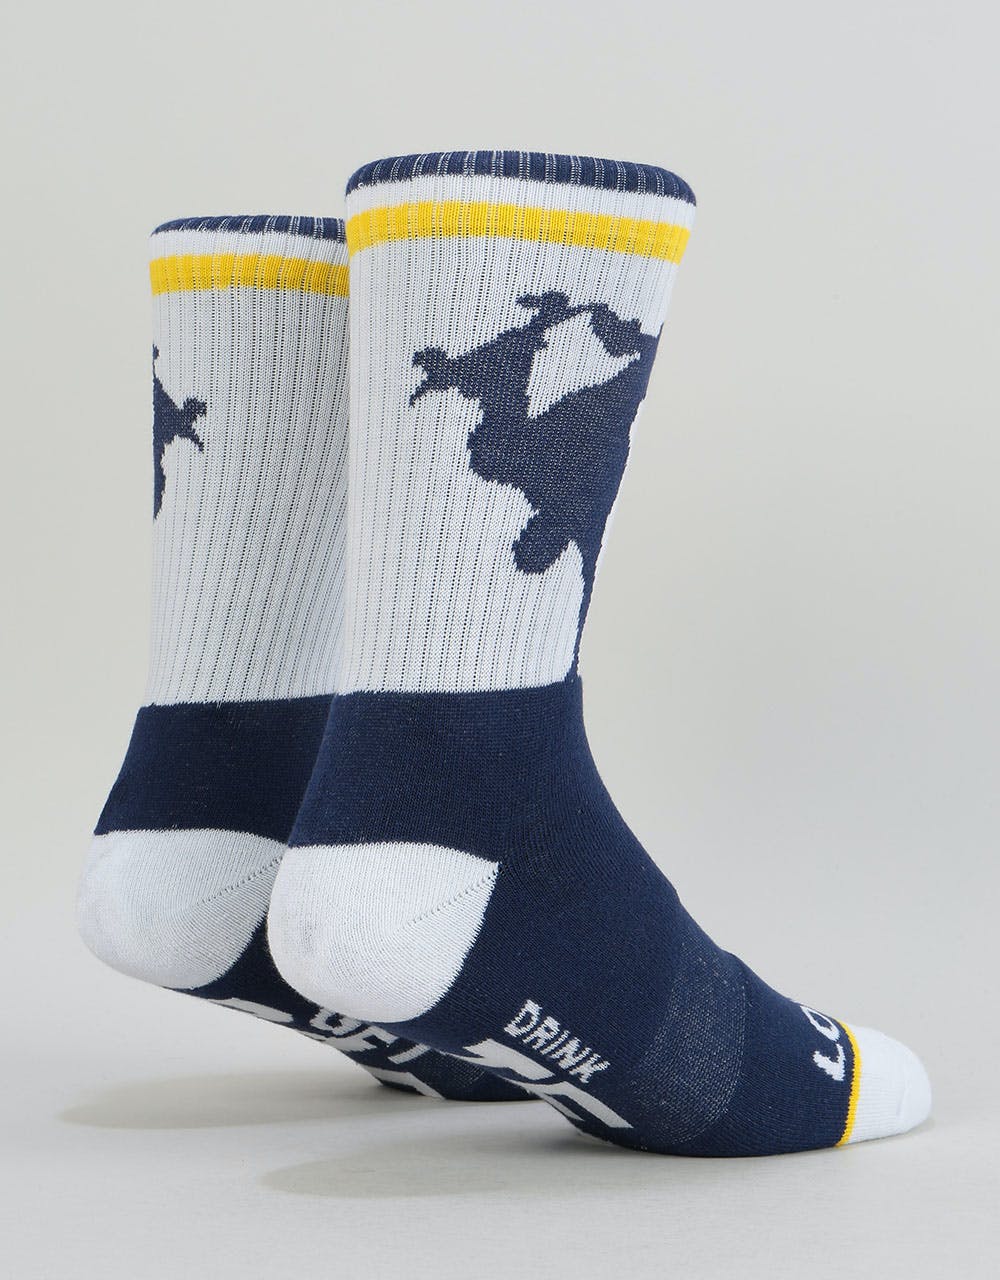 Lovenskate x Apart Together Socks - White/Navy/Yellow